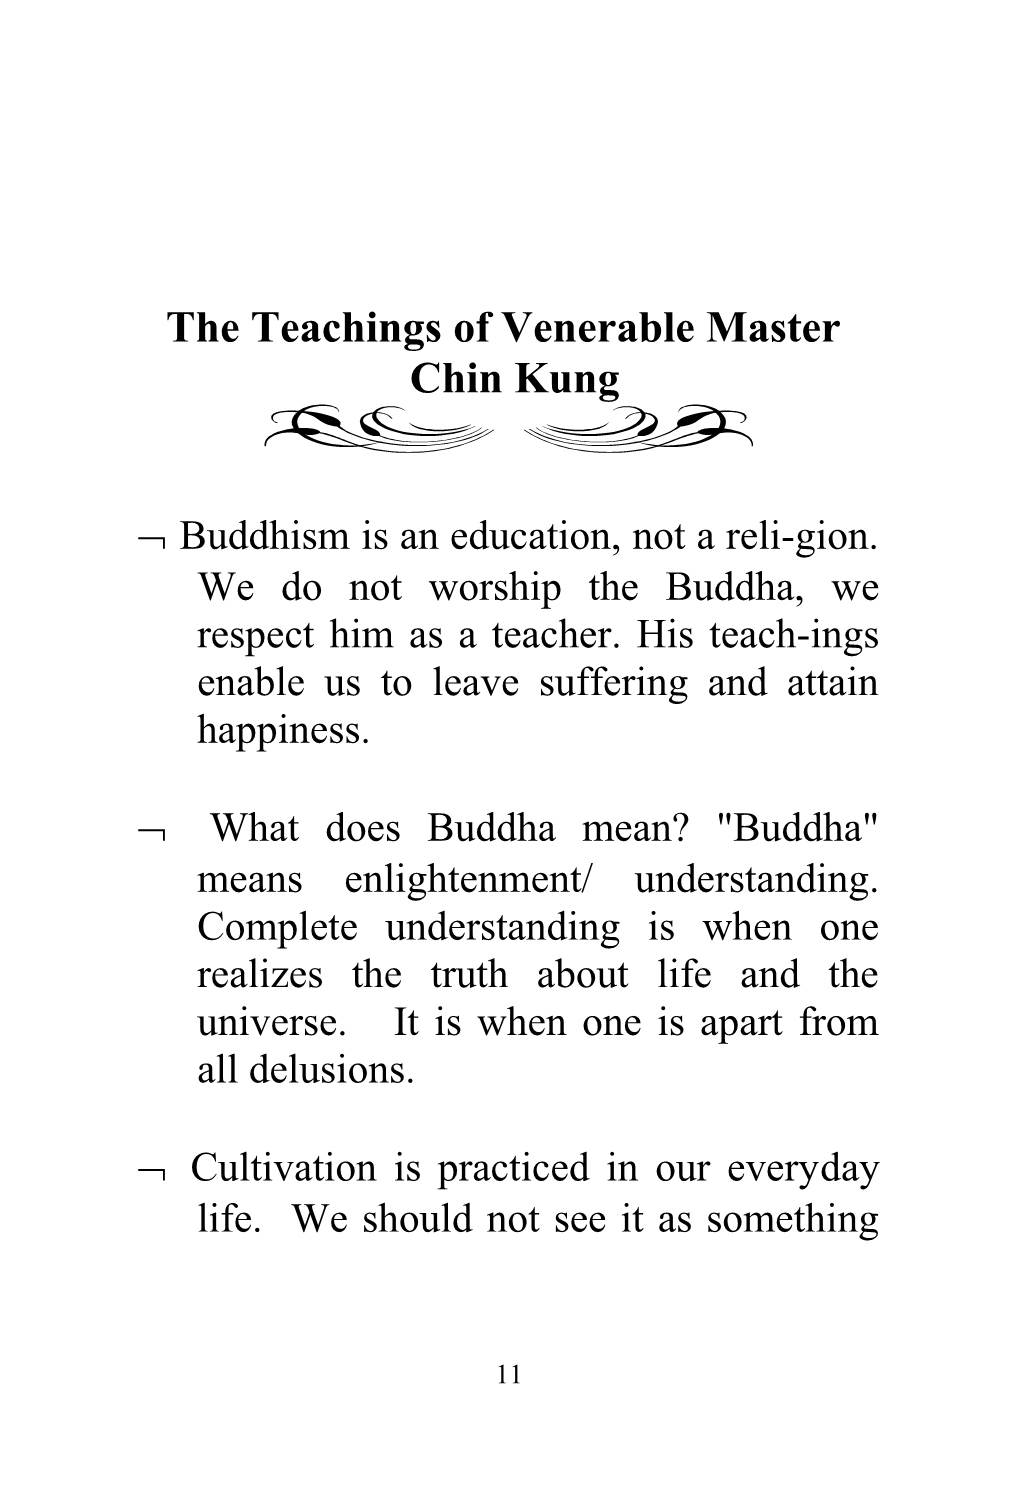 The Teachings Of Venerable Master